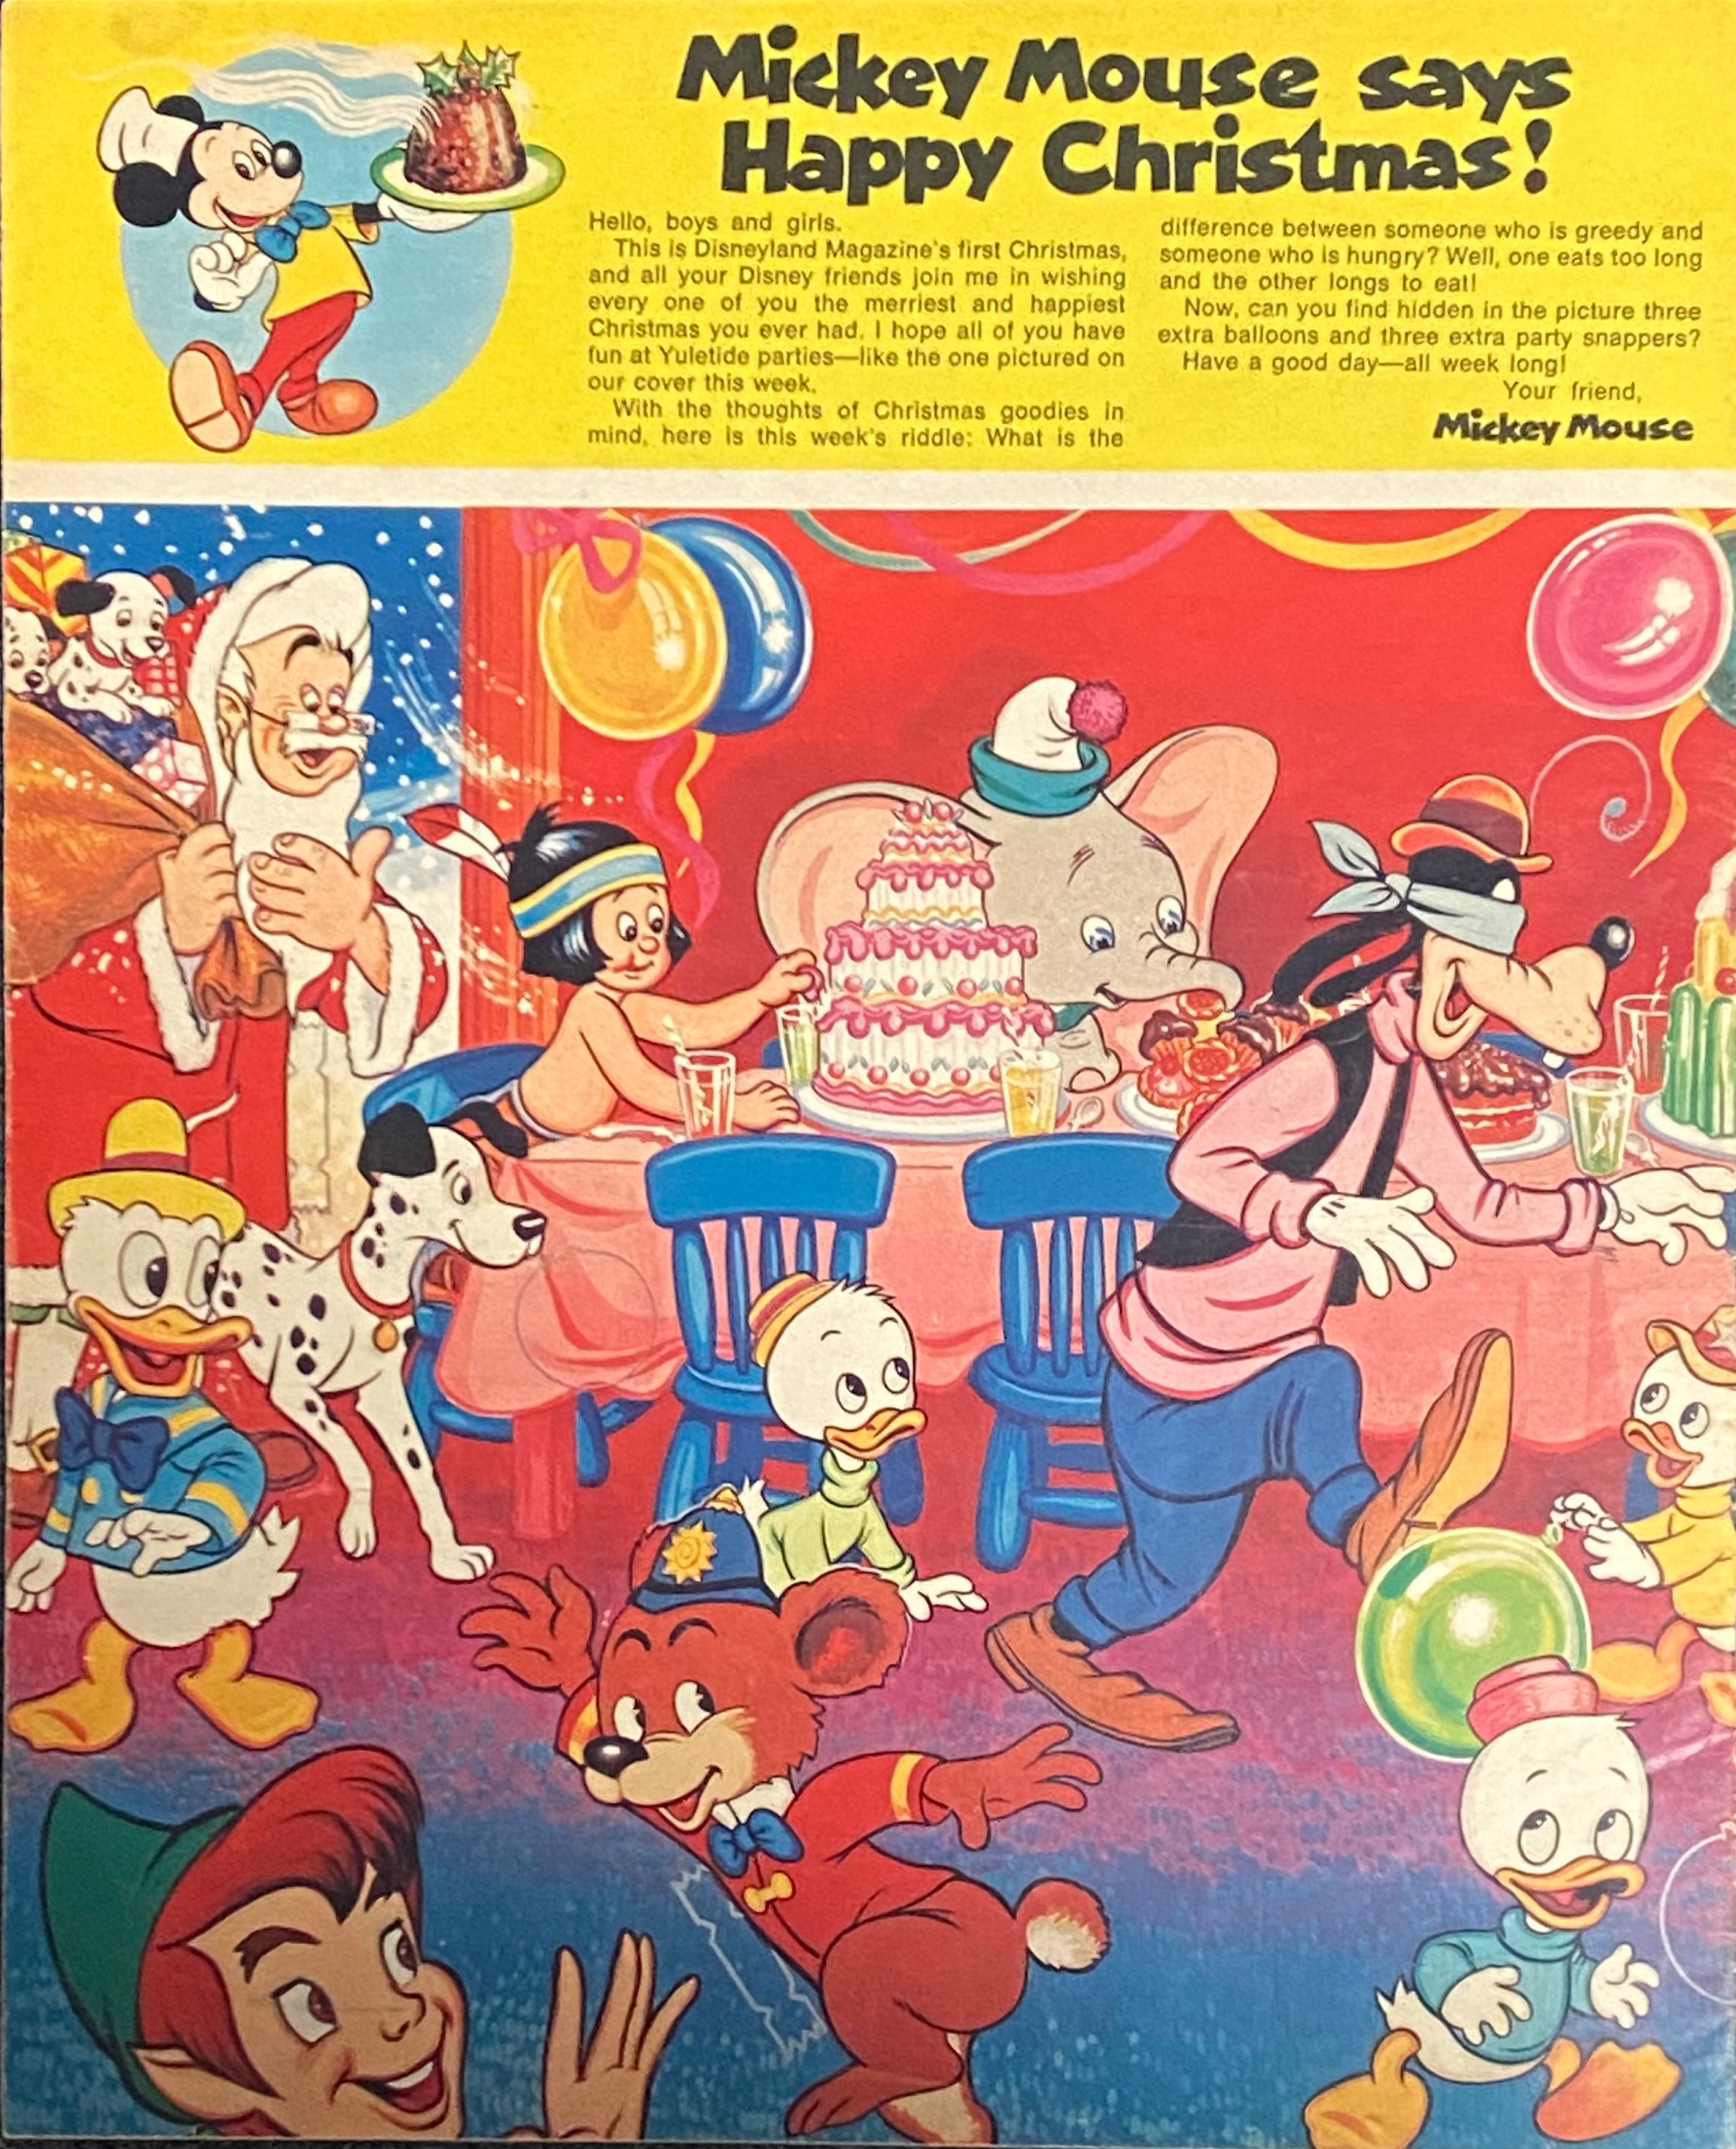 Disneyland Magazine December 19, 1972 - No 45 Vintage Comic -